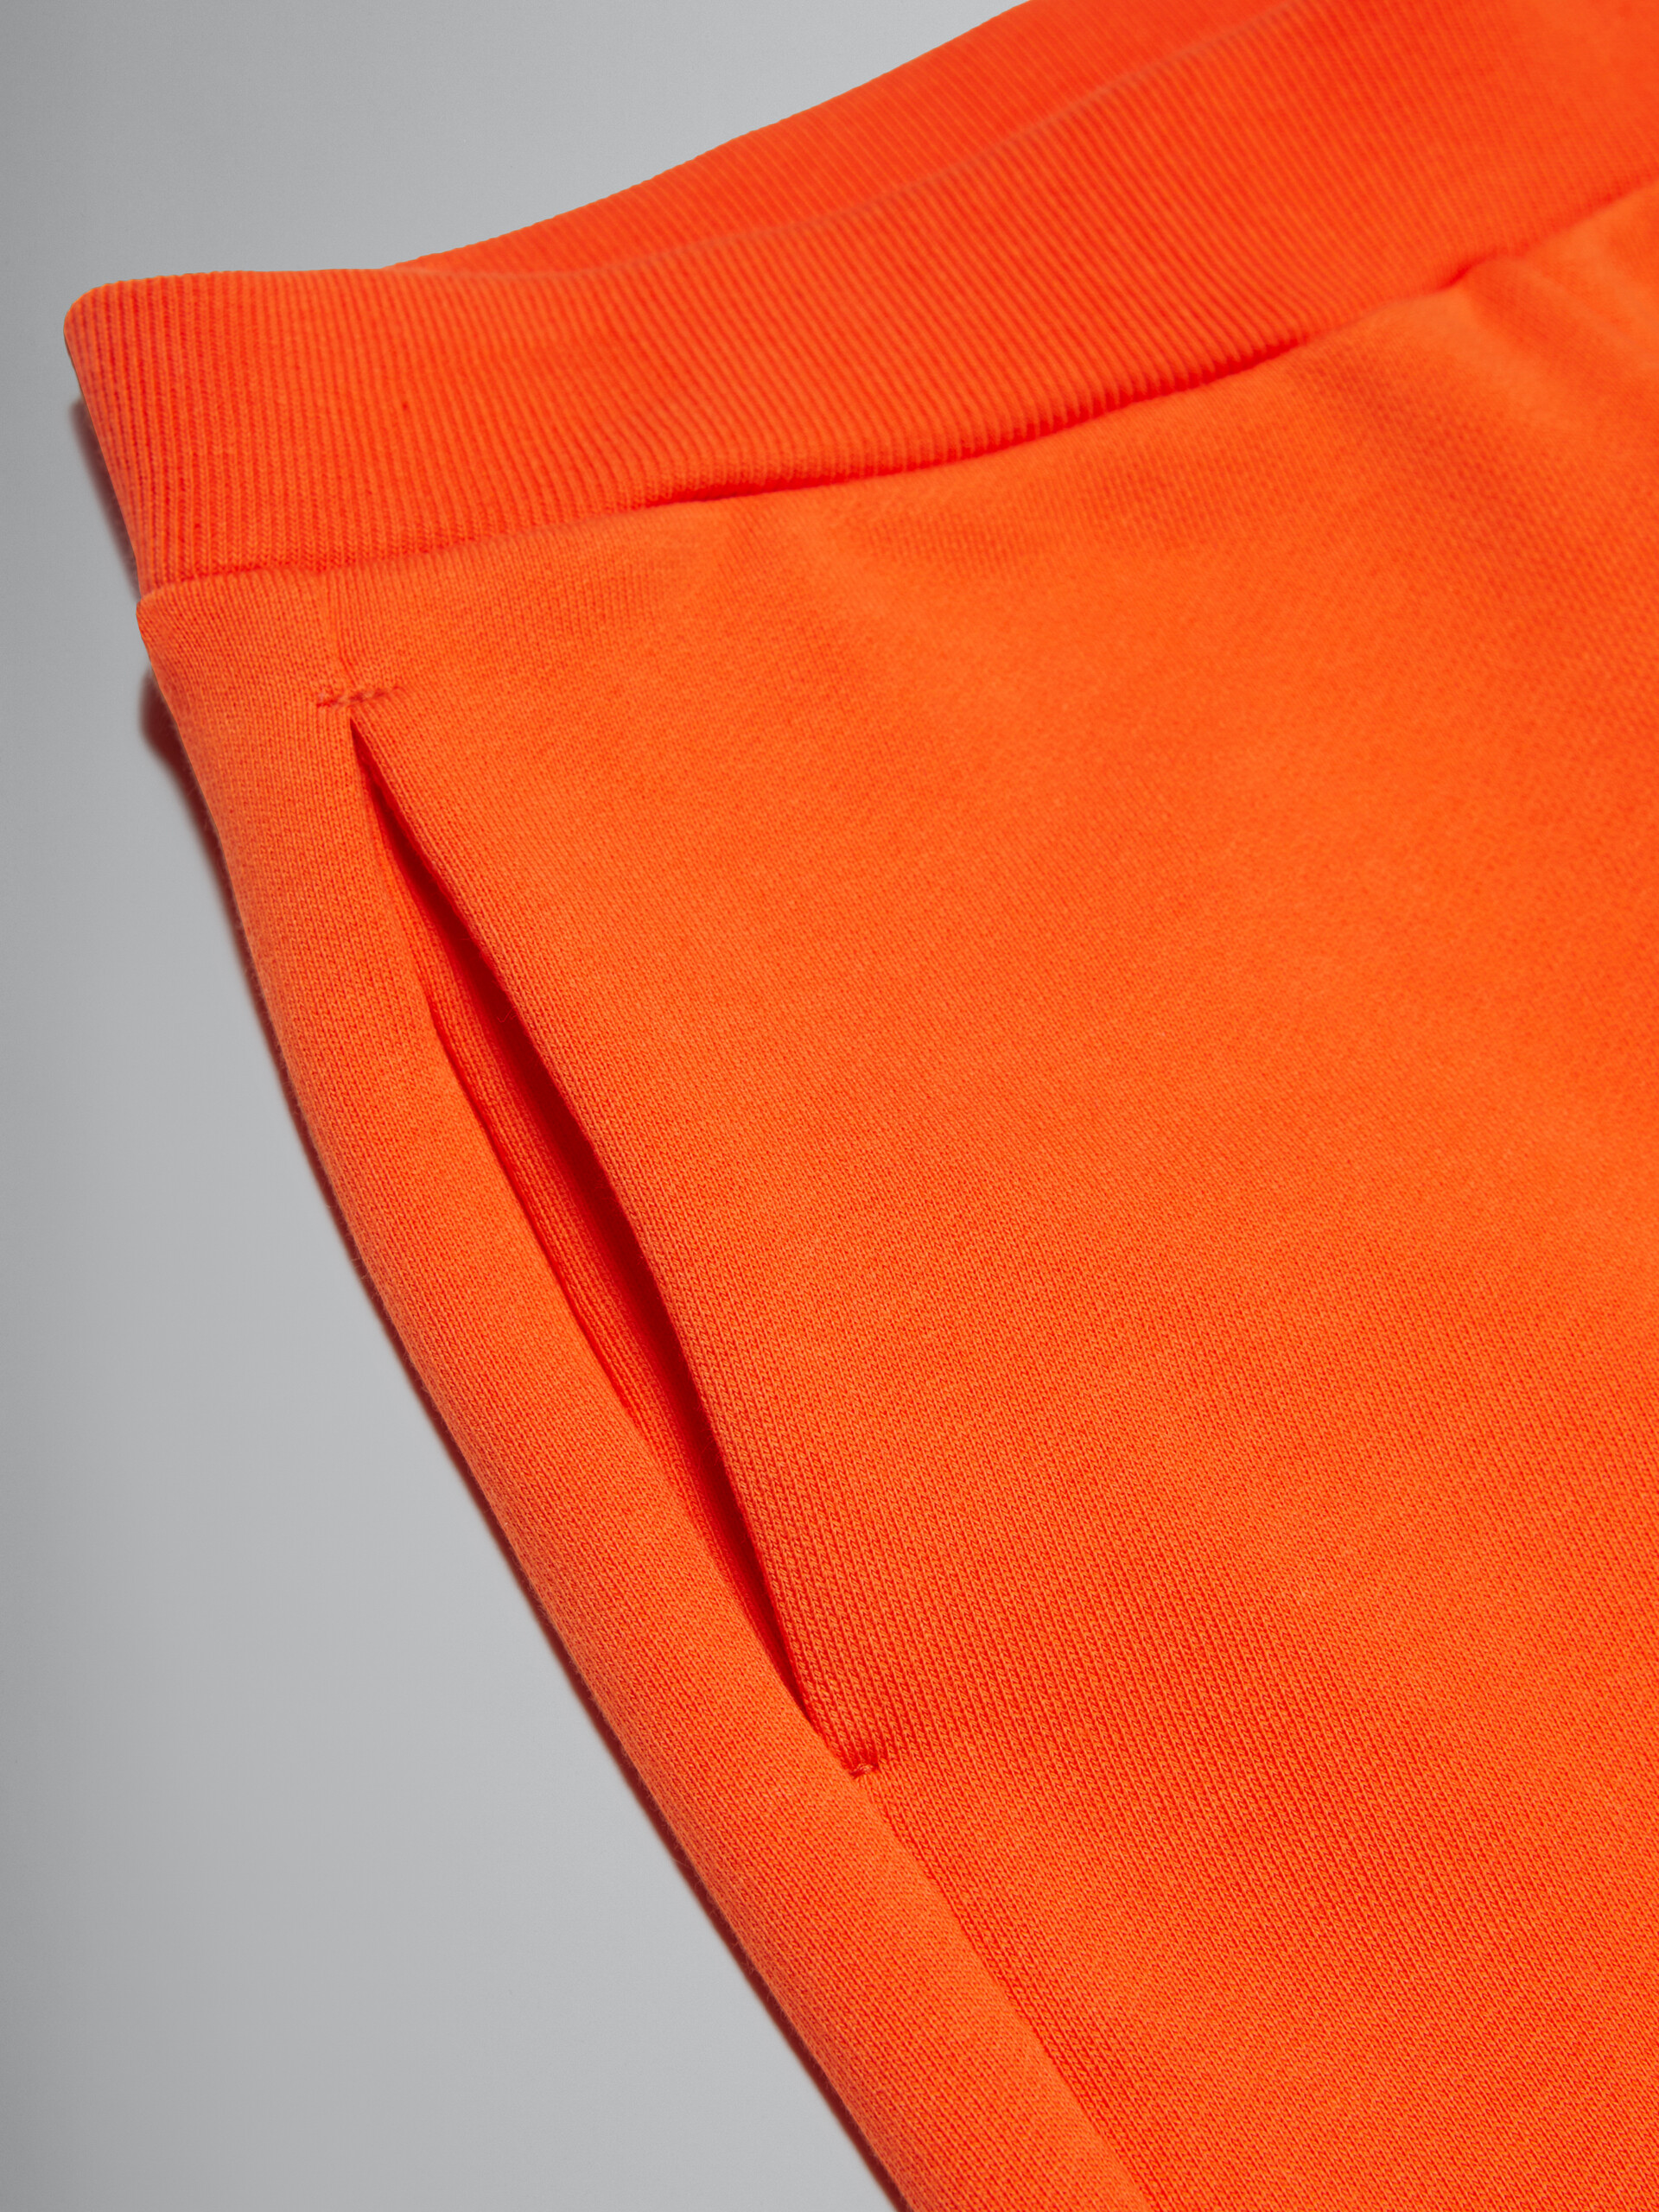 Shorts arancioni in felpa con logo Round - Pantaloni - Image 4